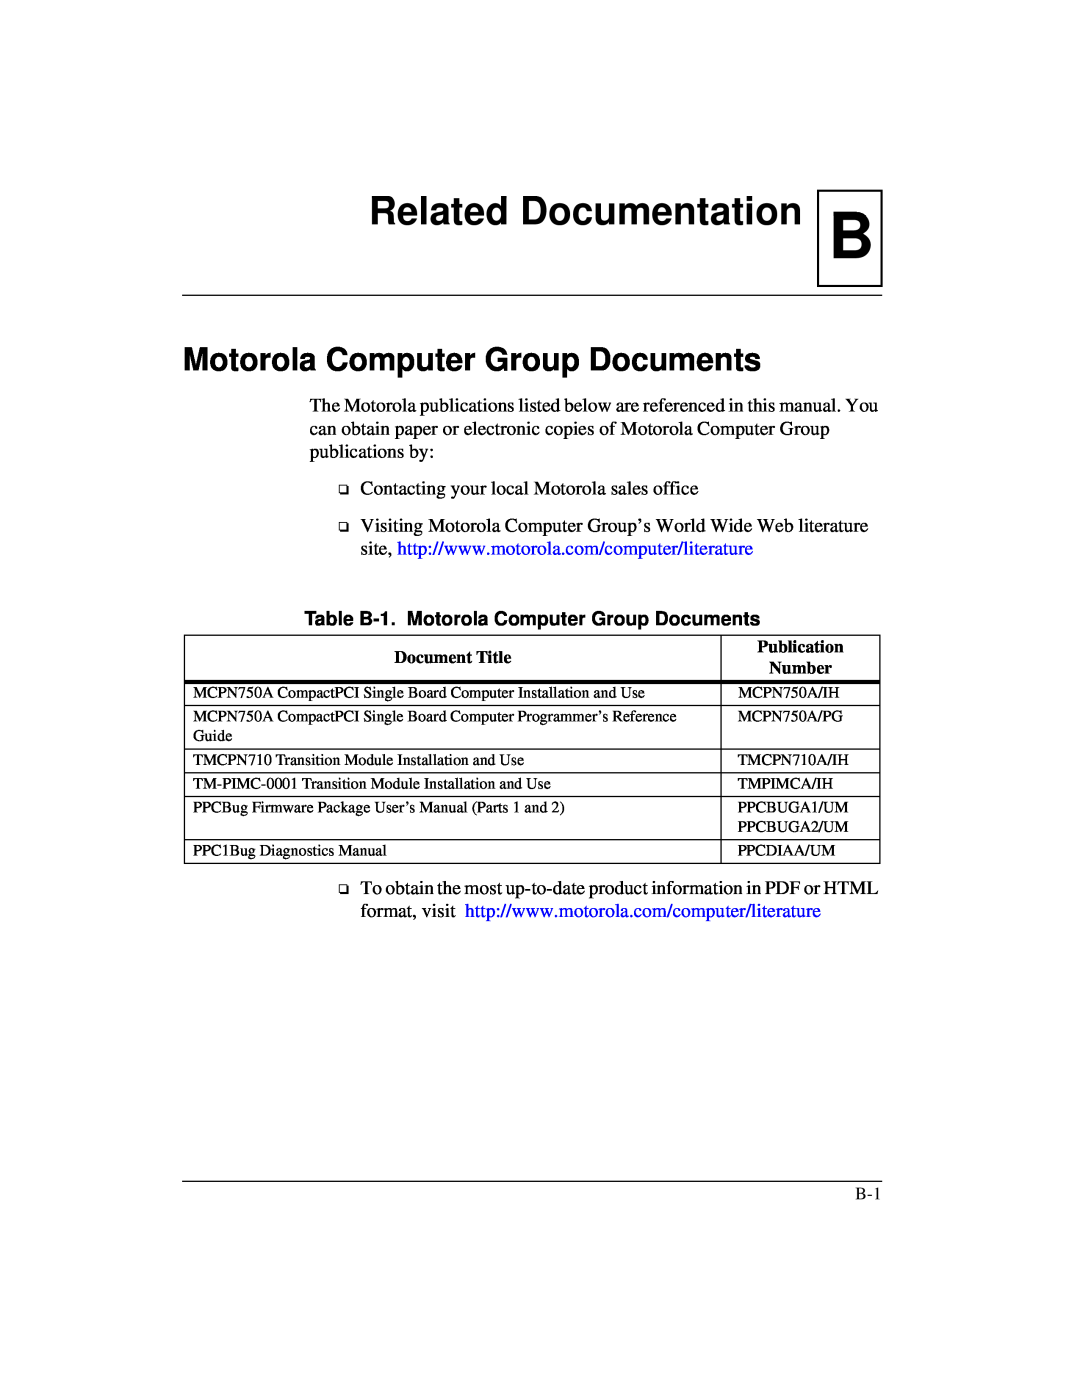 Motorola IH5, MCPN750A manual BRelated Documentation, Table B-1. Motorola Computer Group Documents 